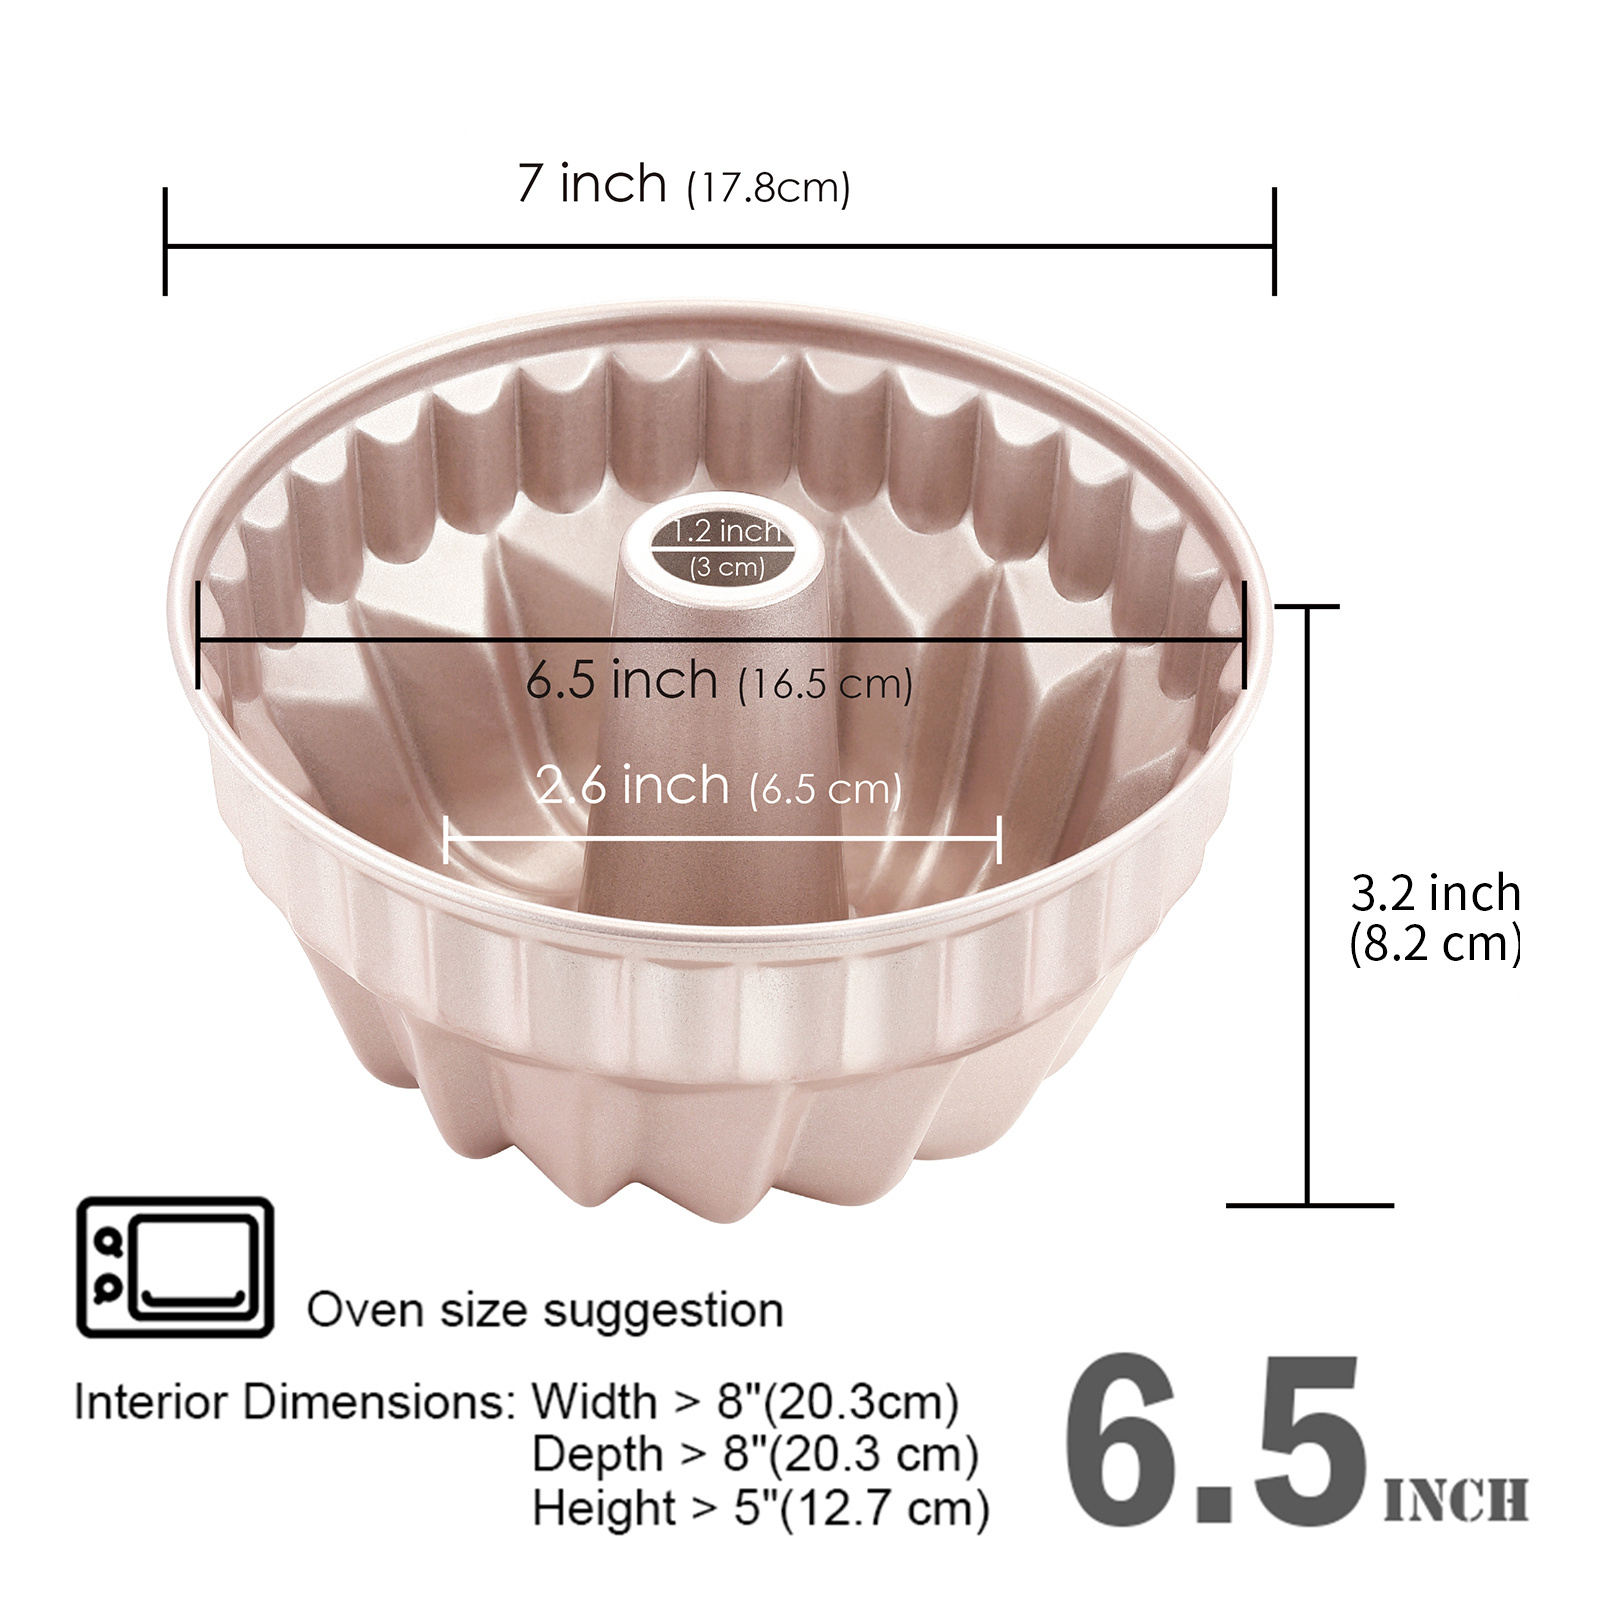 CHEFMADE Bundt Cake Pan, 7-Inch Non-Stick Vortex-Shaped Tube Pan